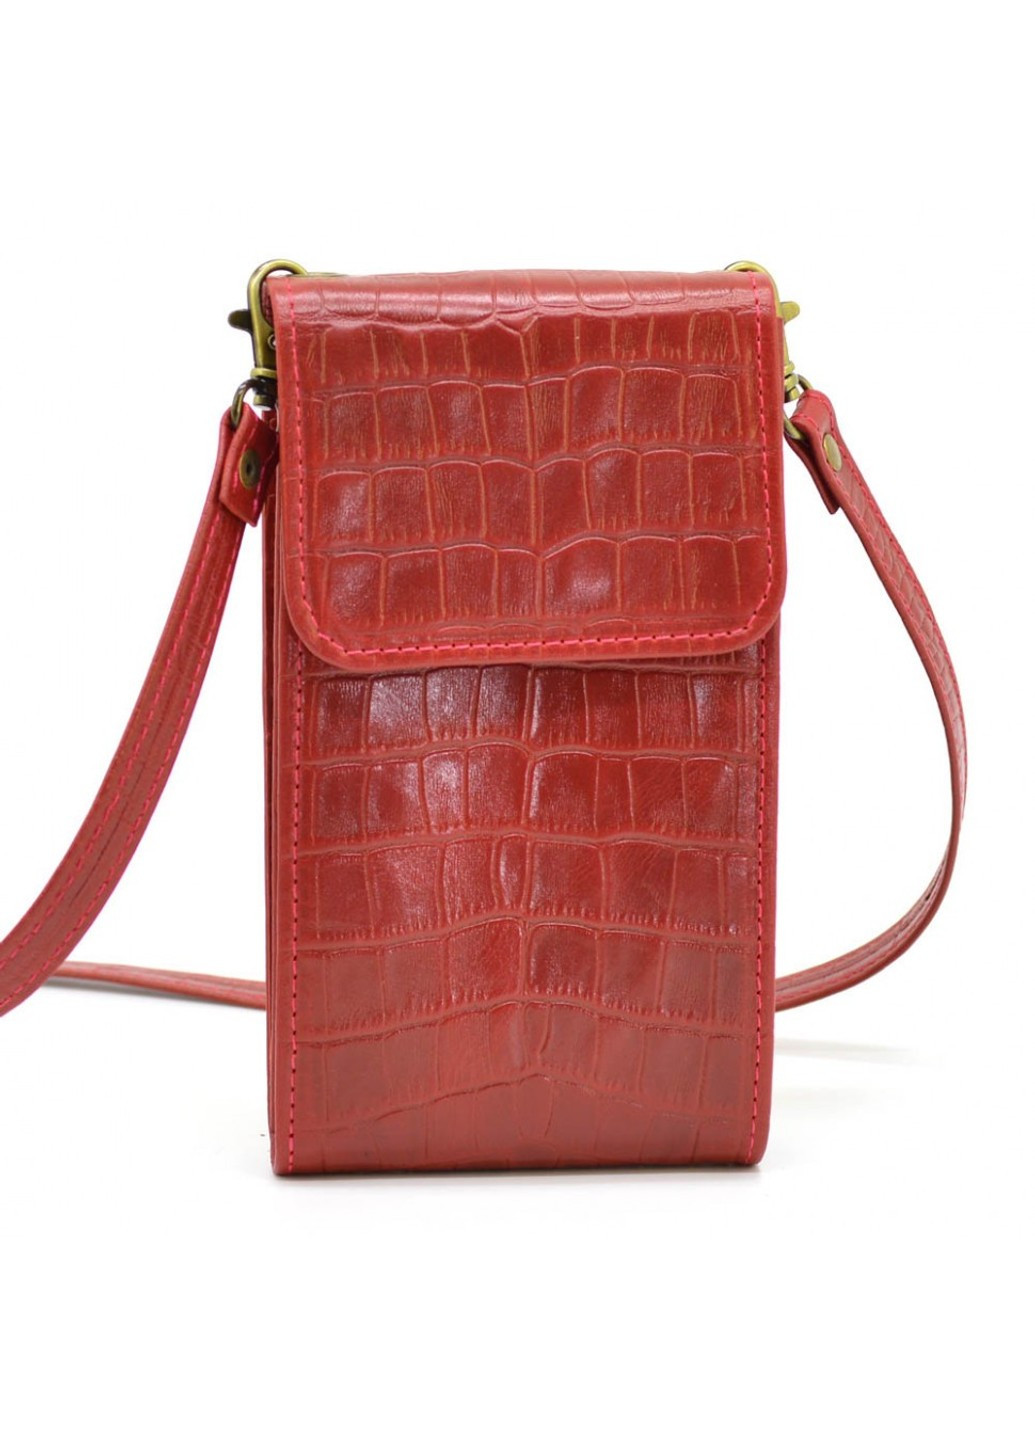 Женская кожаная сумка-чехол панч REP3-2122-4lx TARWA (263776710)